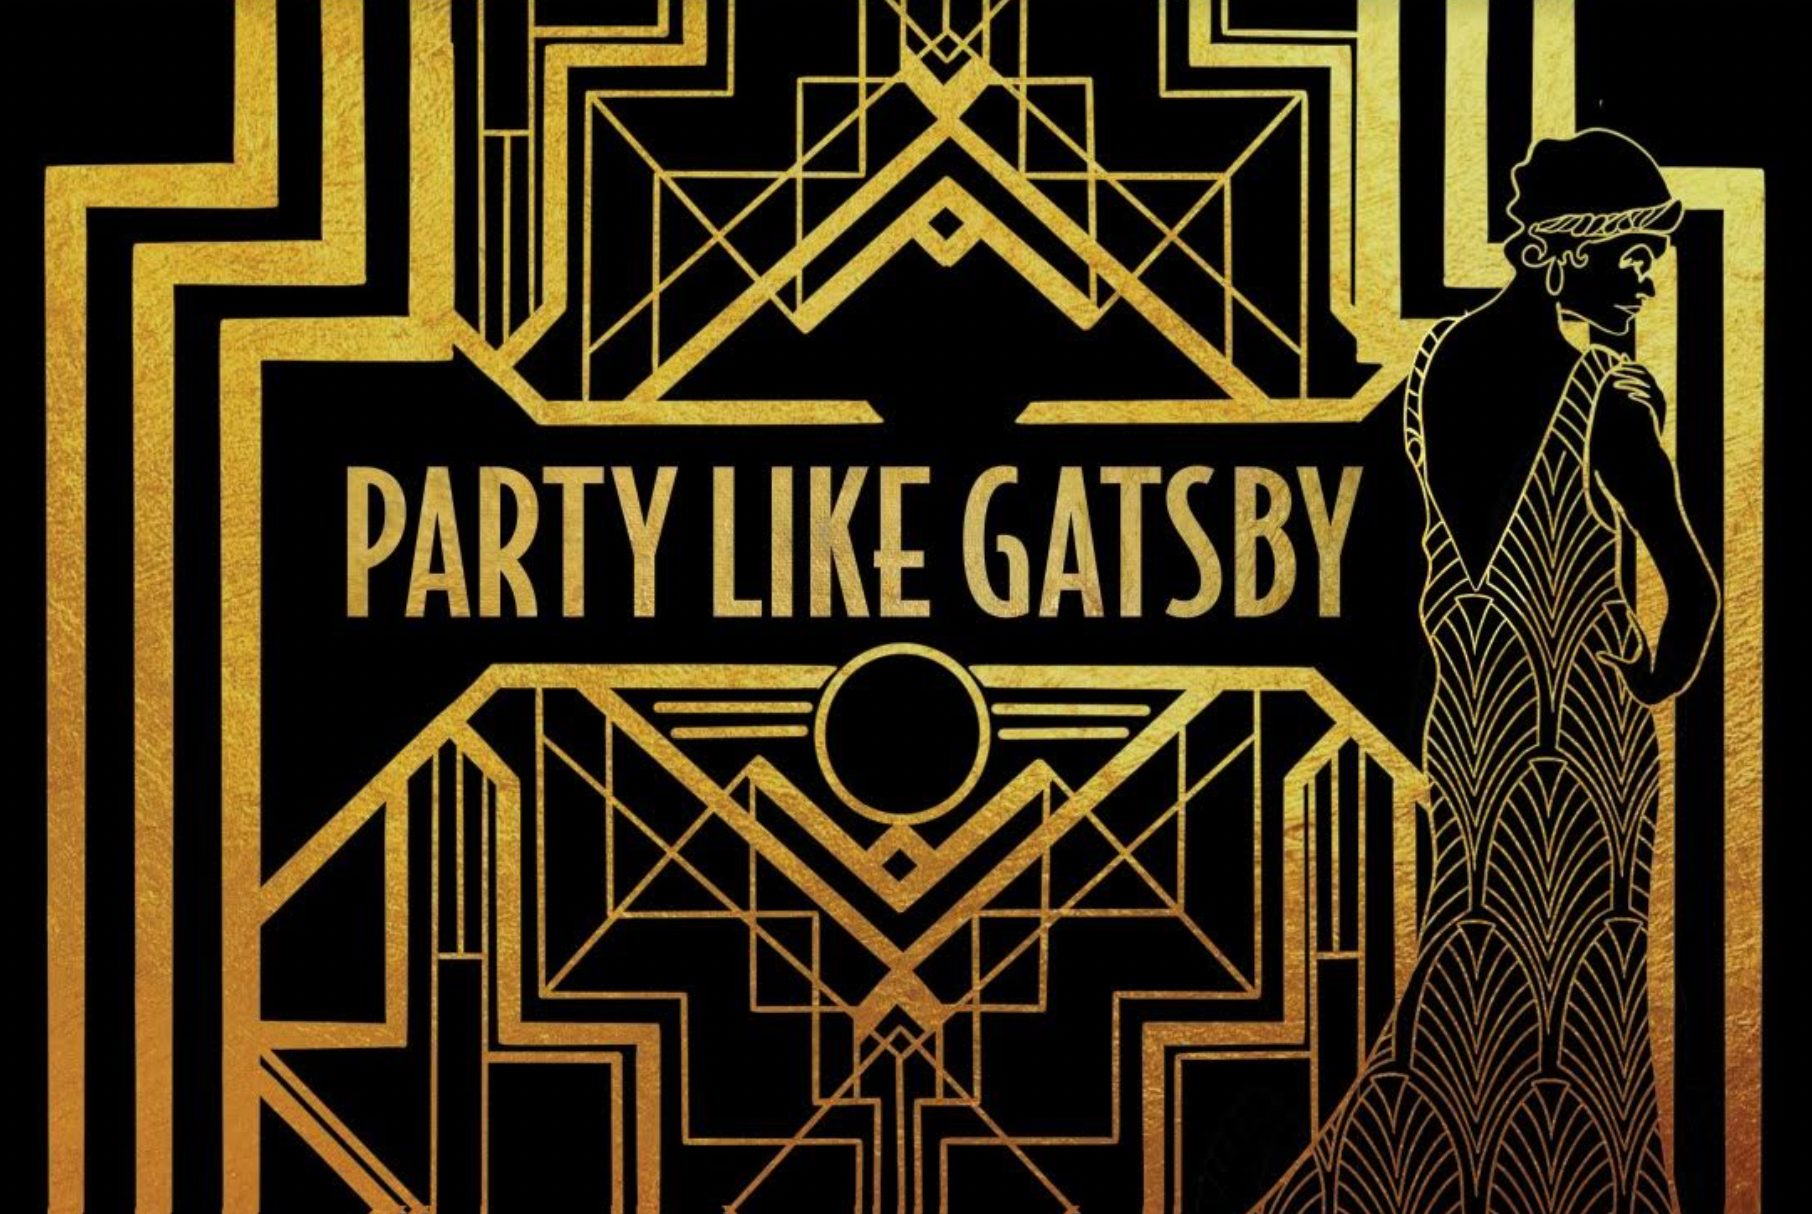 Party like Gatsby backdrop